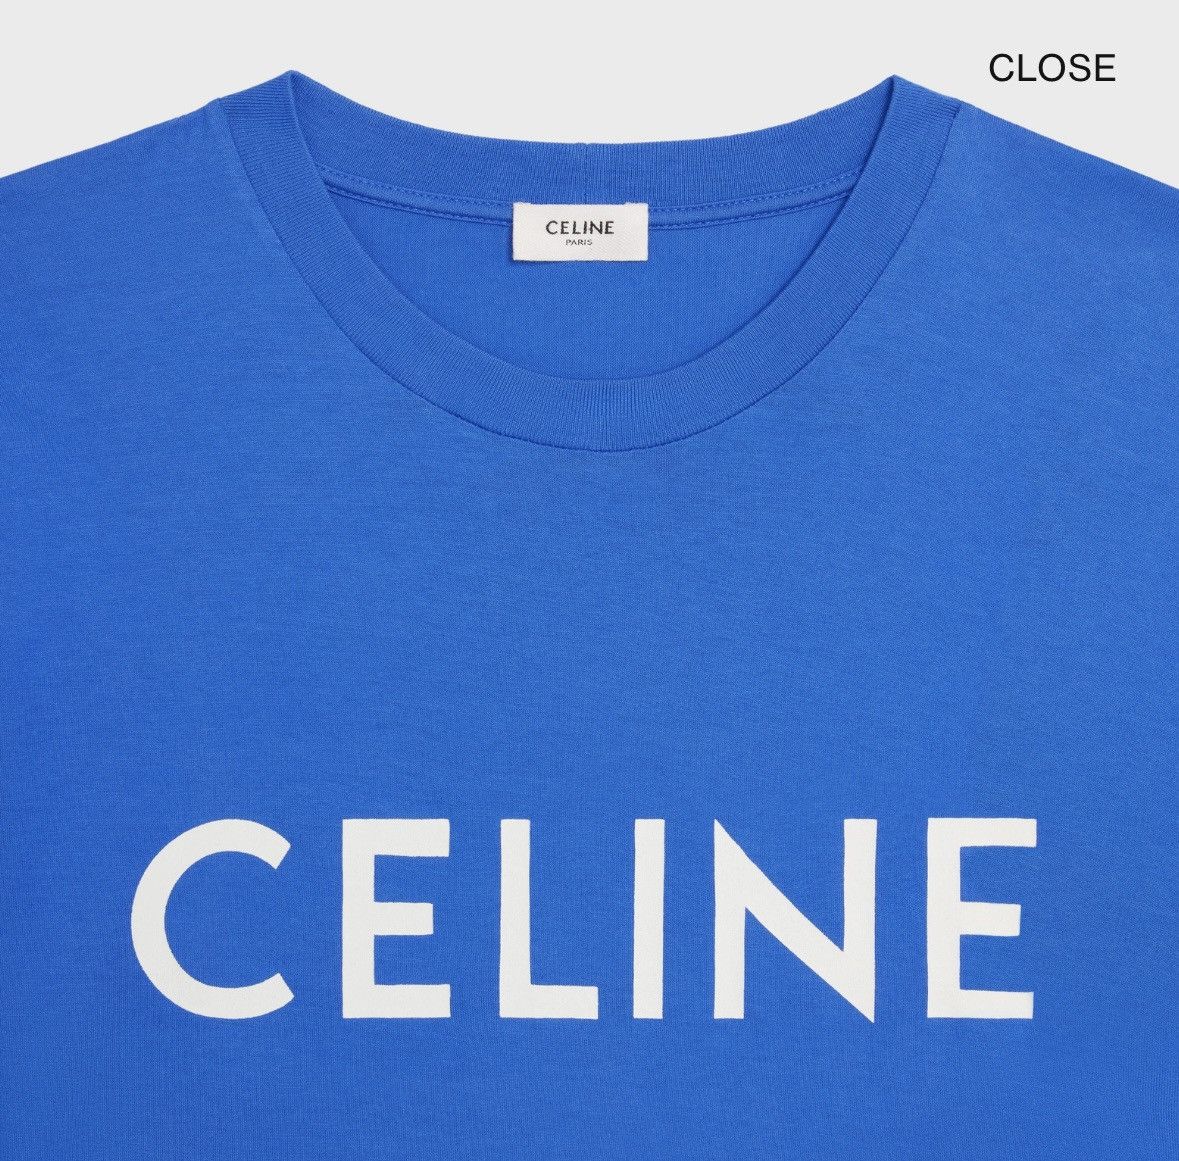 Celine Celine by Hedi Slimane Blue logo t shirt tee size M Size US M / EU 48-50 / 2 - 3 Thumbnail